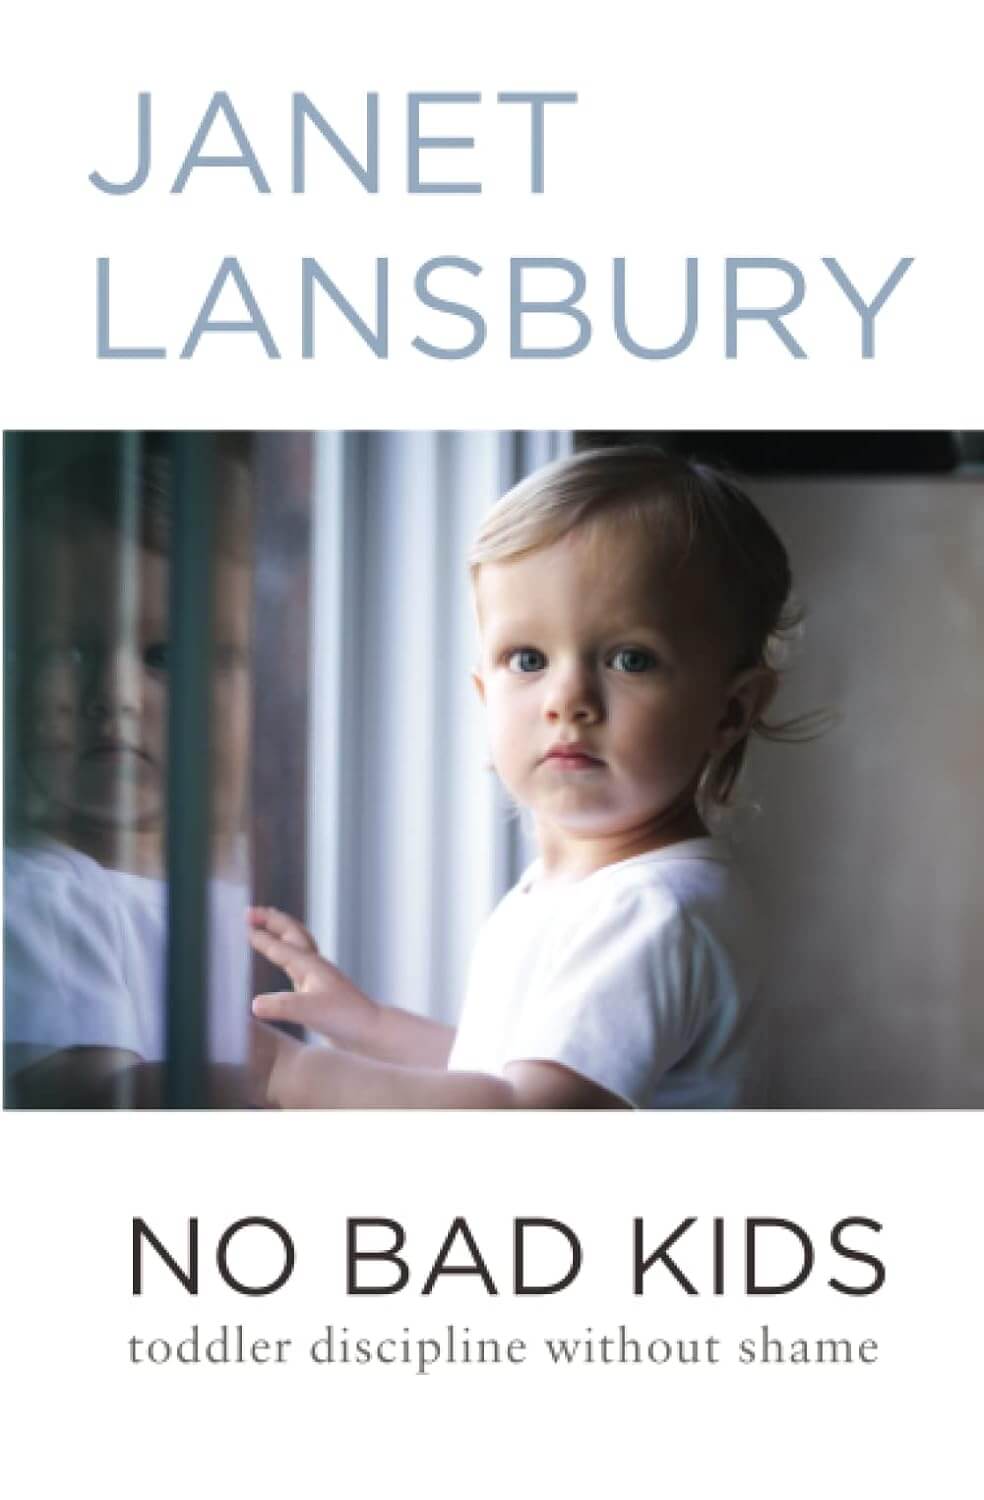 "NO BAD KIDS: Toddler Discipline Without Shame" by Janet Lansbury